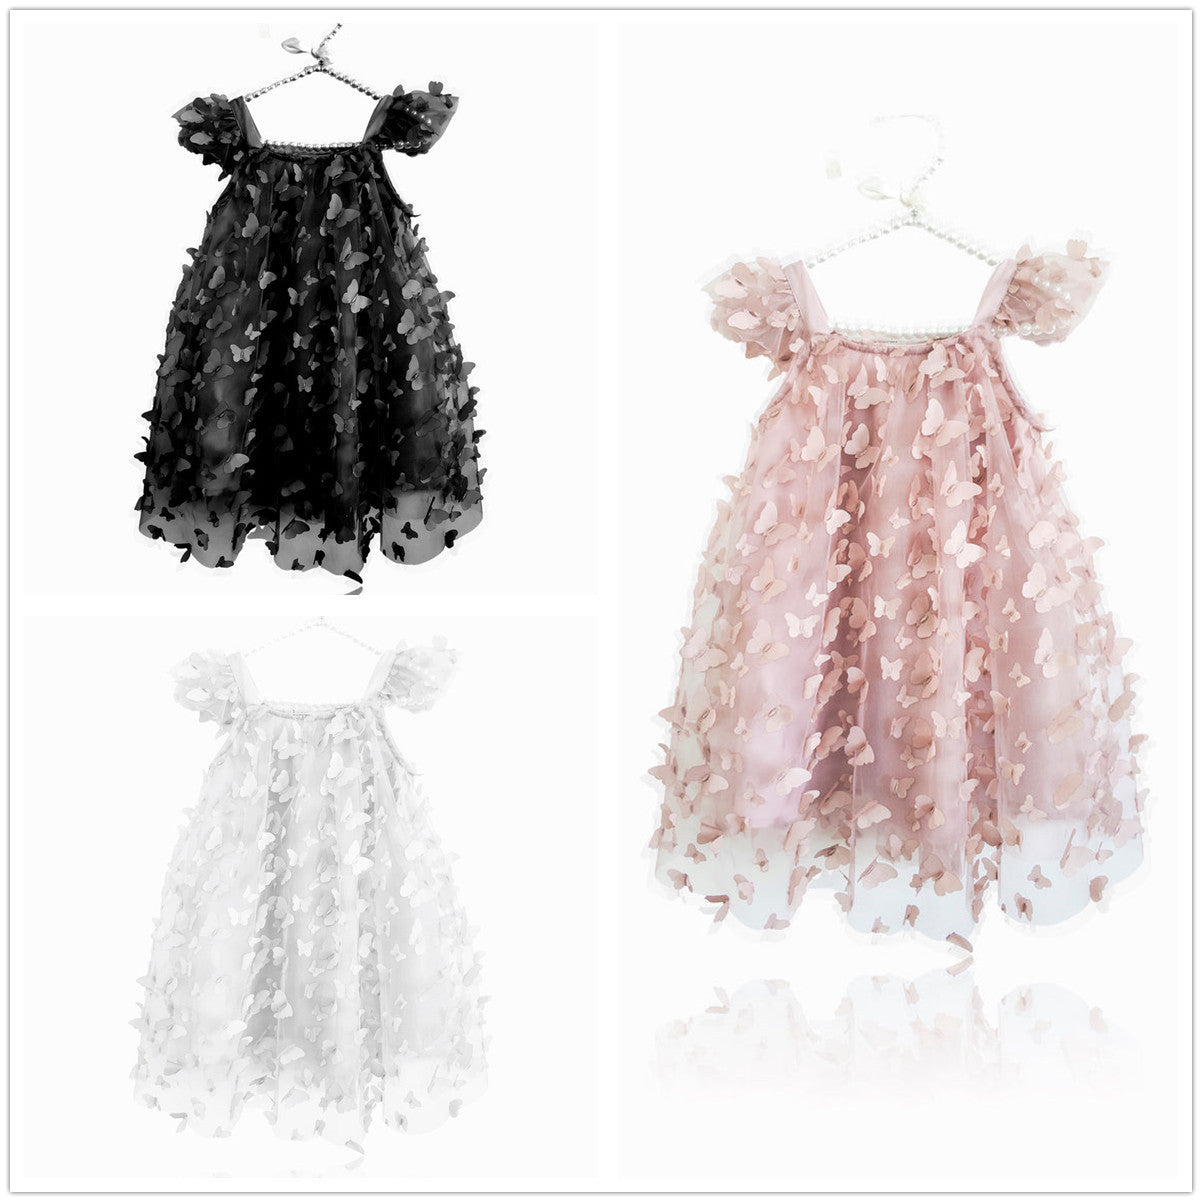 Butterfly Wings Girl Fairy Dress - Princess Flower Girl Dress - First Birthday Dress